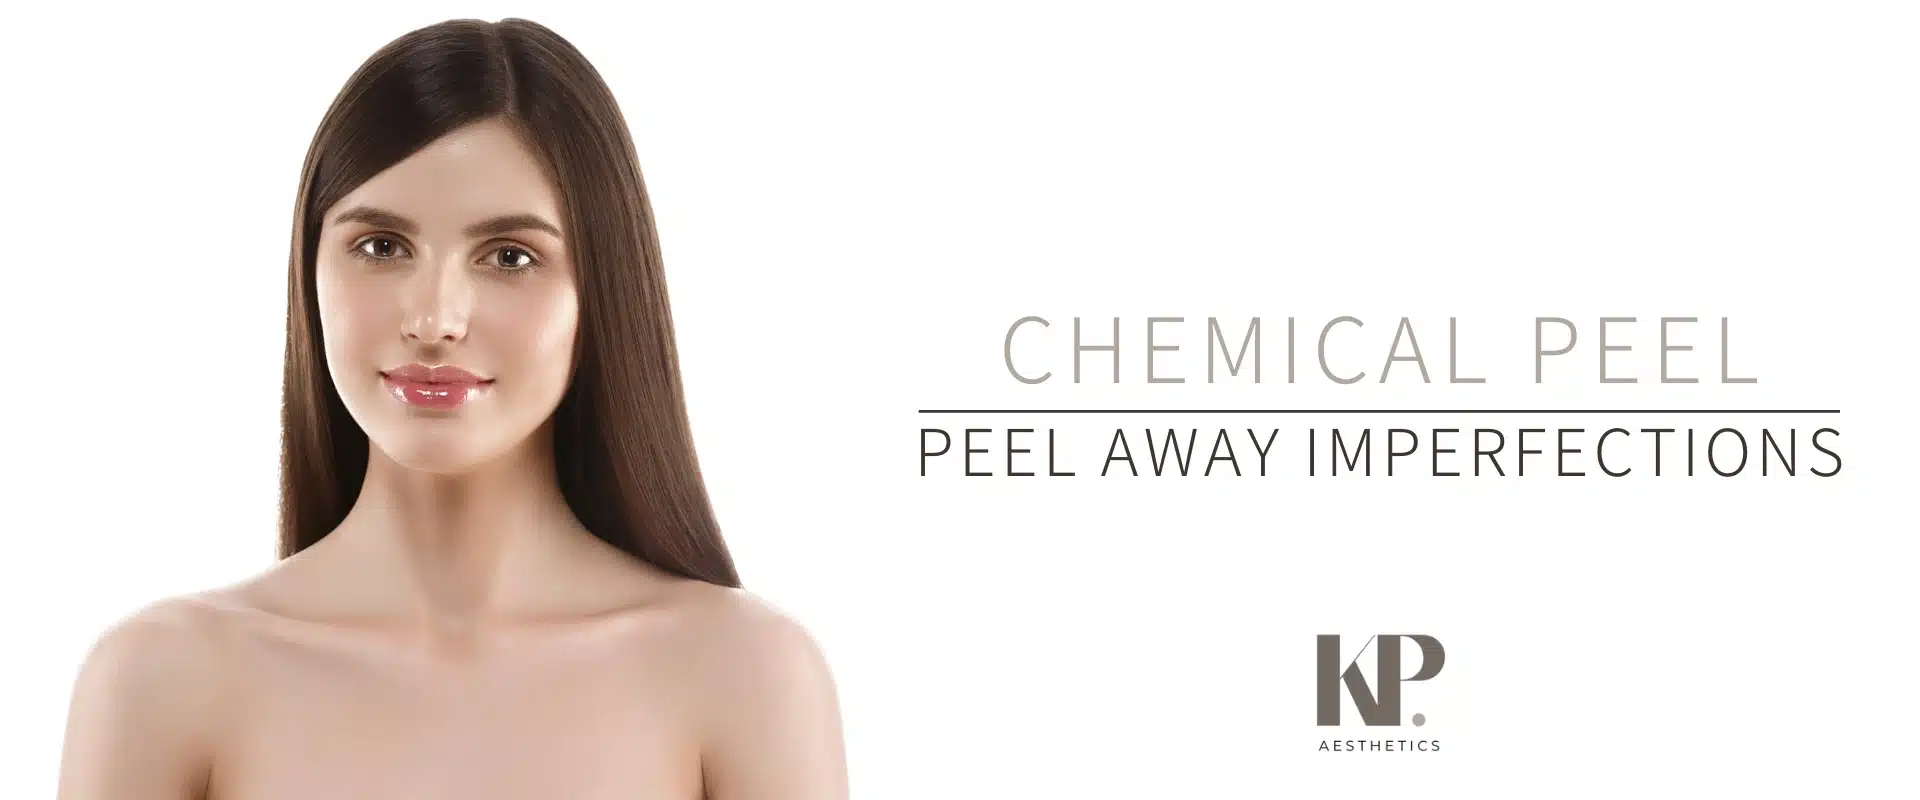 Chemical Peel - Peel Away Imperfections - KP Aesthetics